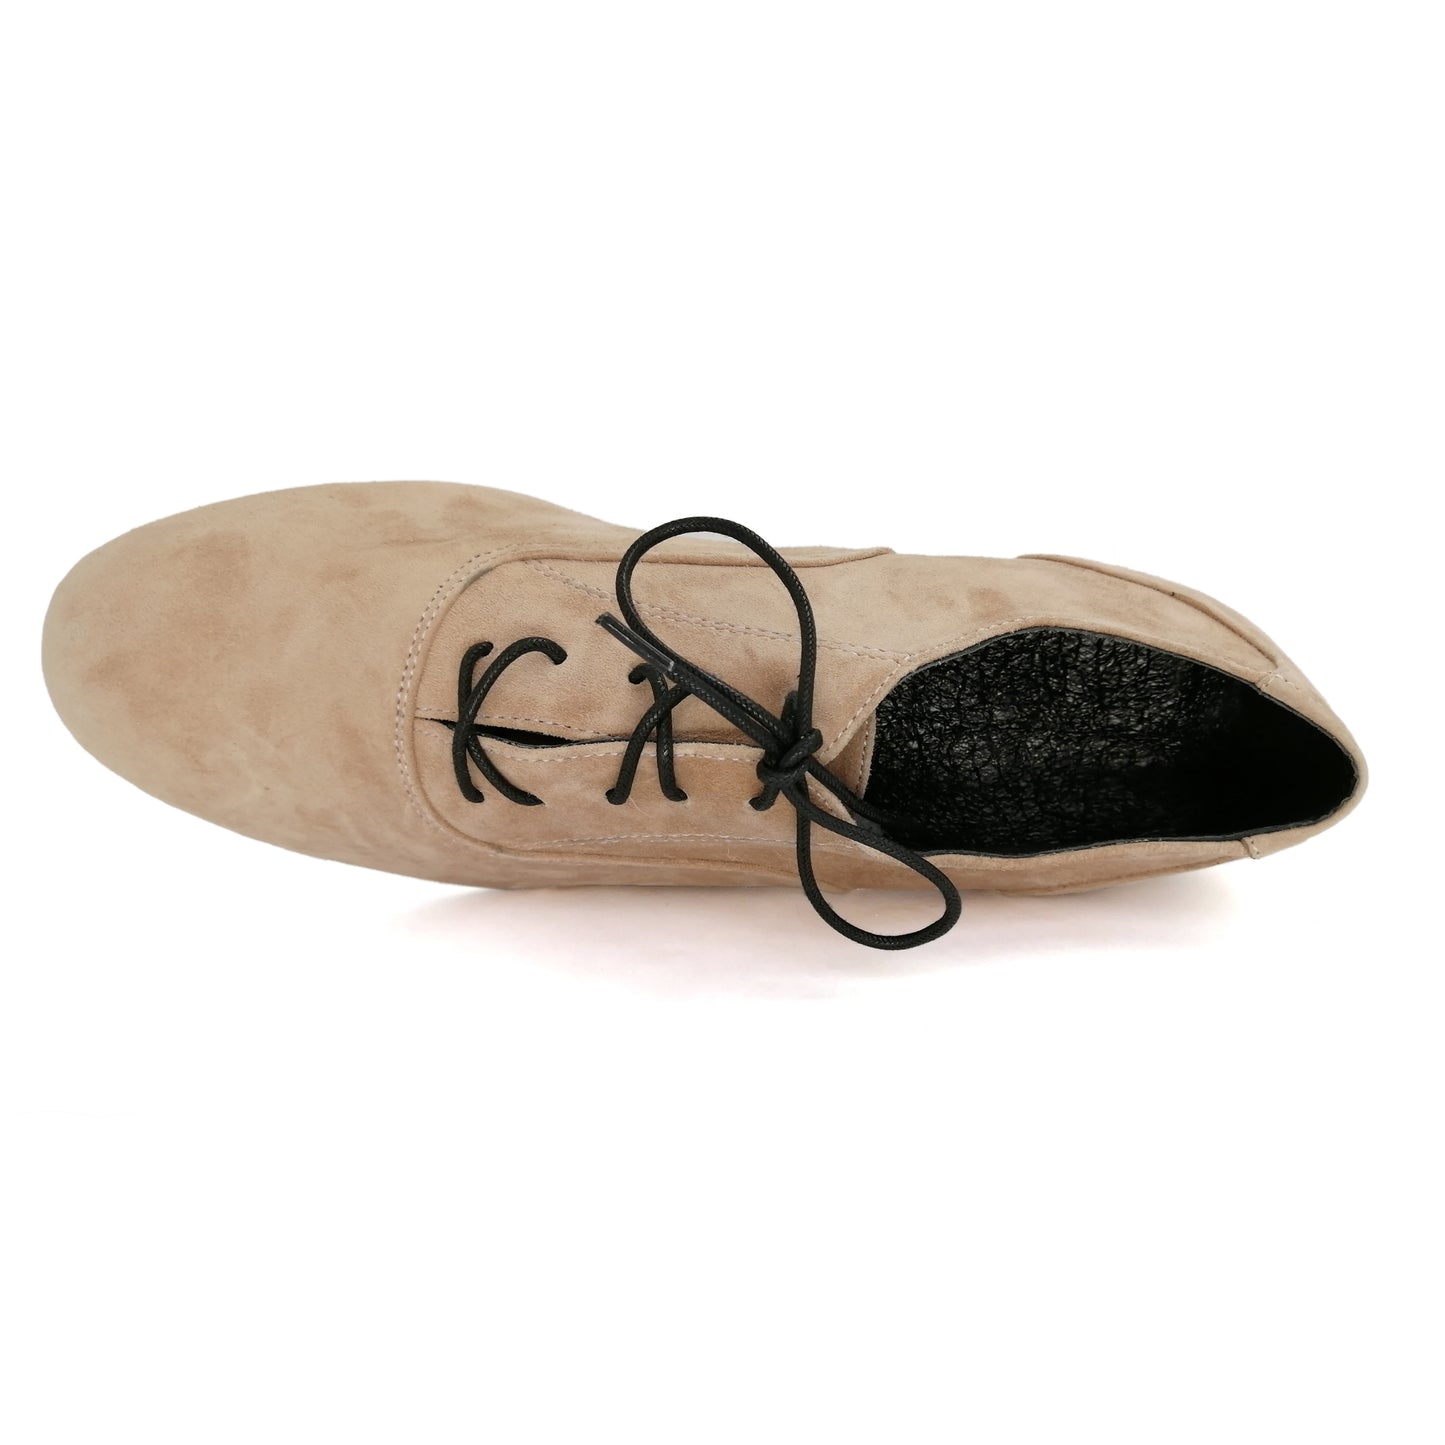 Pro Dancer Men's Argentine Tango Dance Shoes Leather Sole 1 inch Heel Lace-up Brown (PD-1002D)